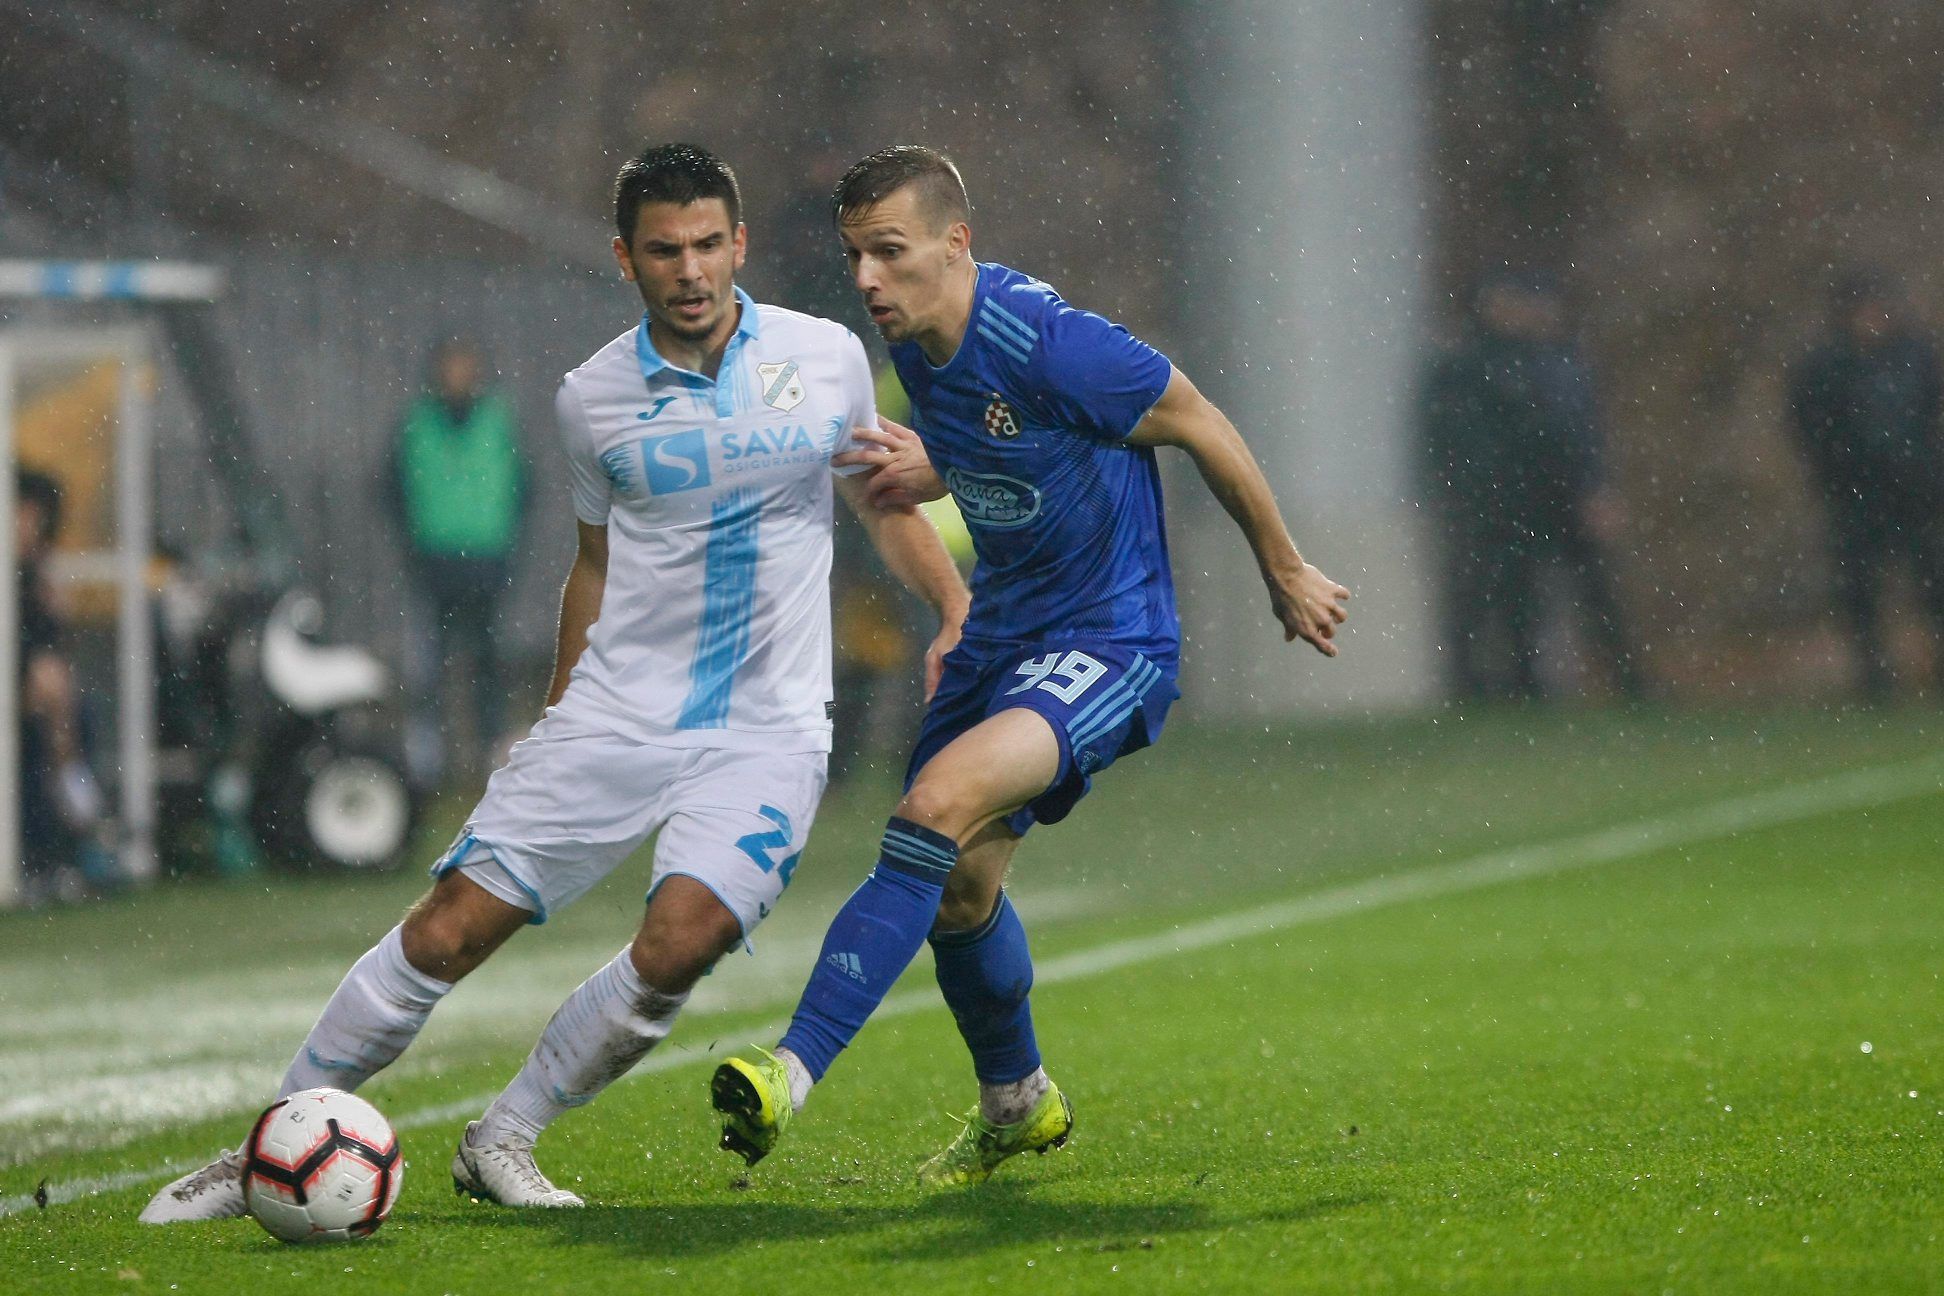 Dinamo Zagreb vs Rijeka Prediction, Betting Tips & Odds │19 MARCH, 2023